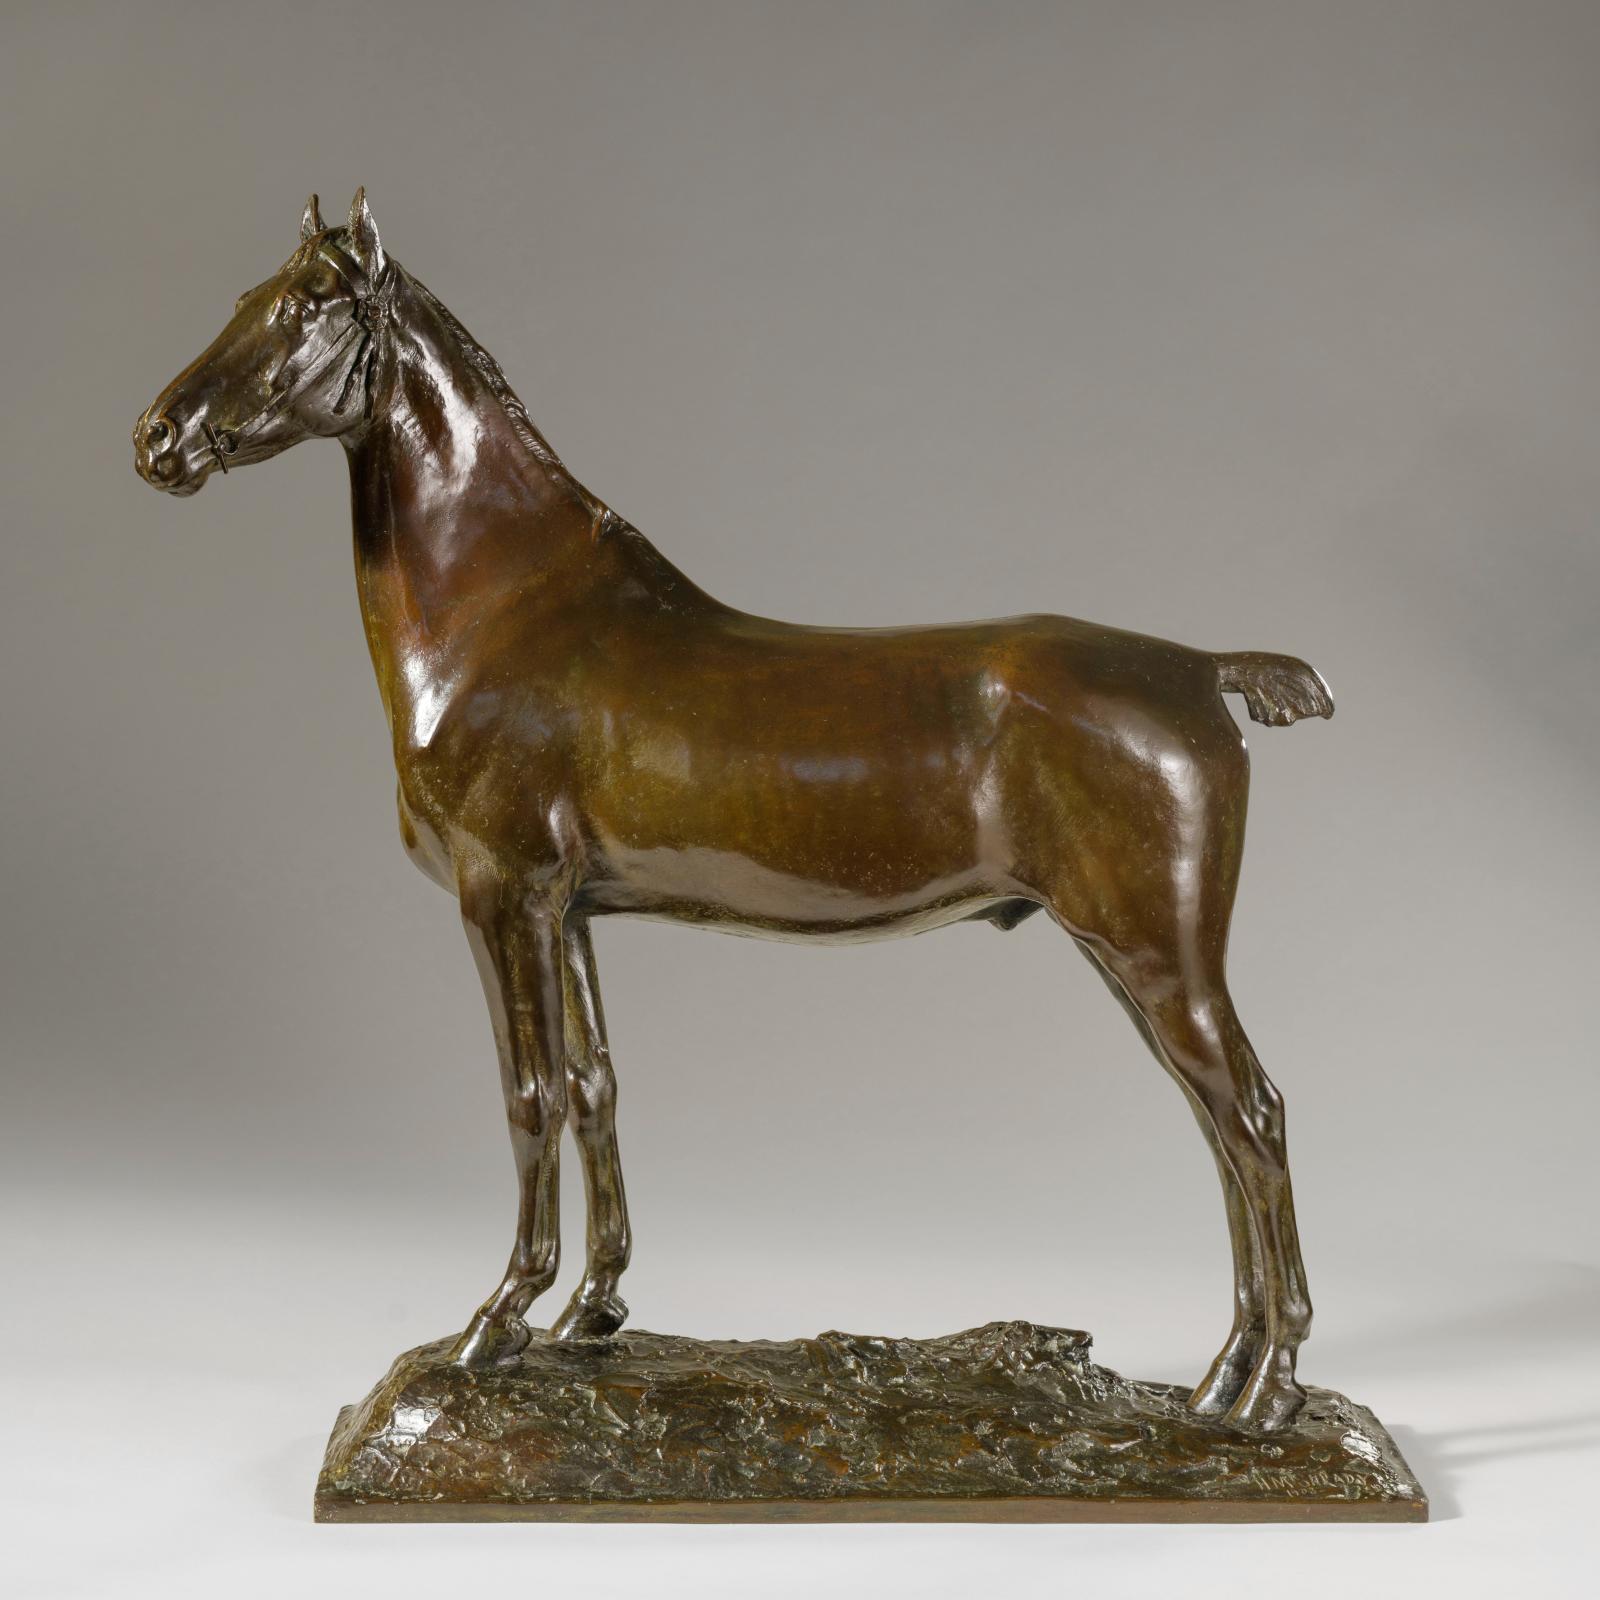 A bronze horse